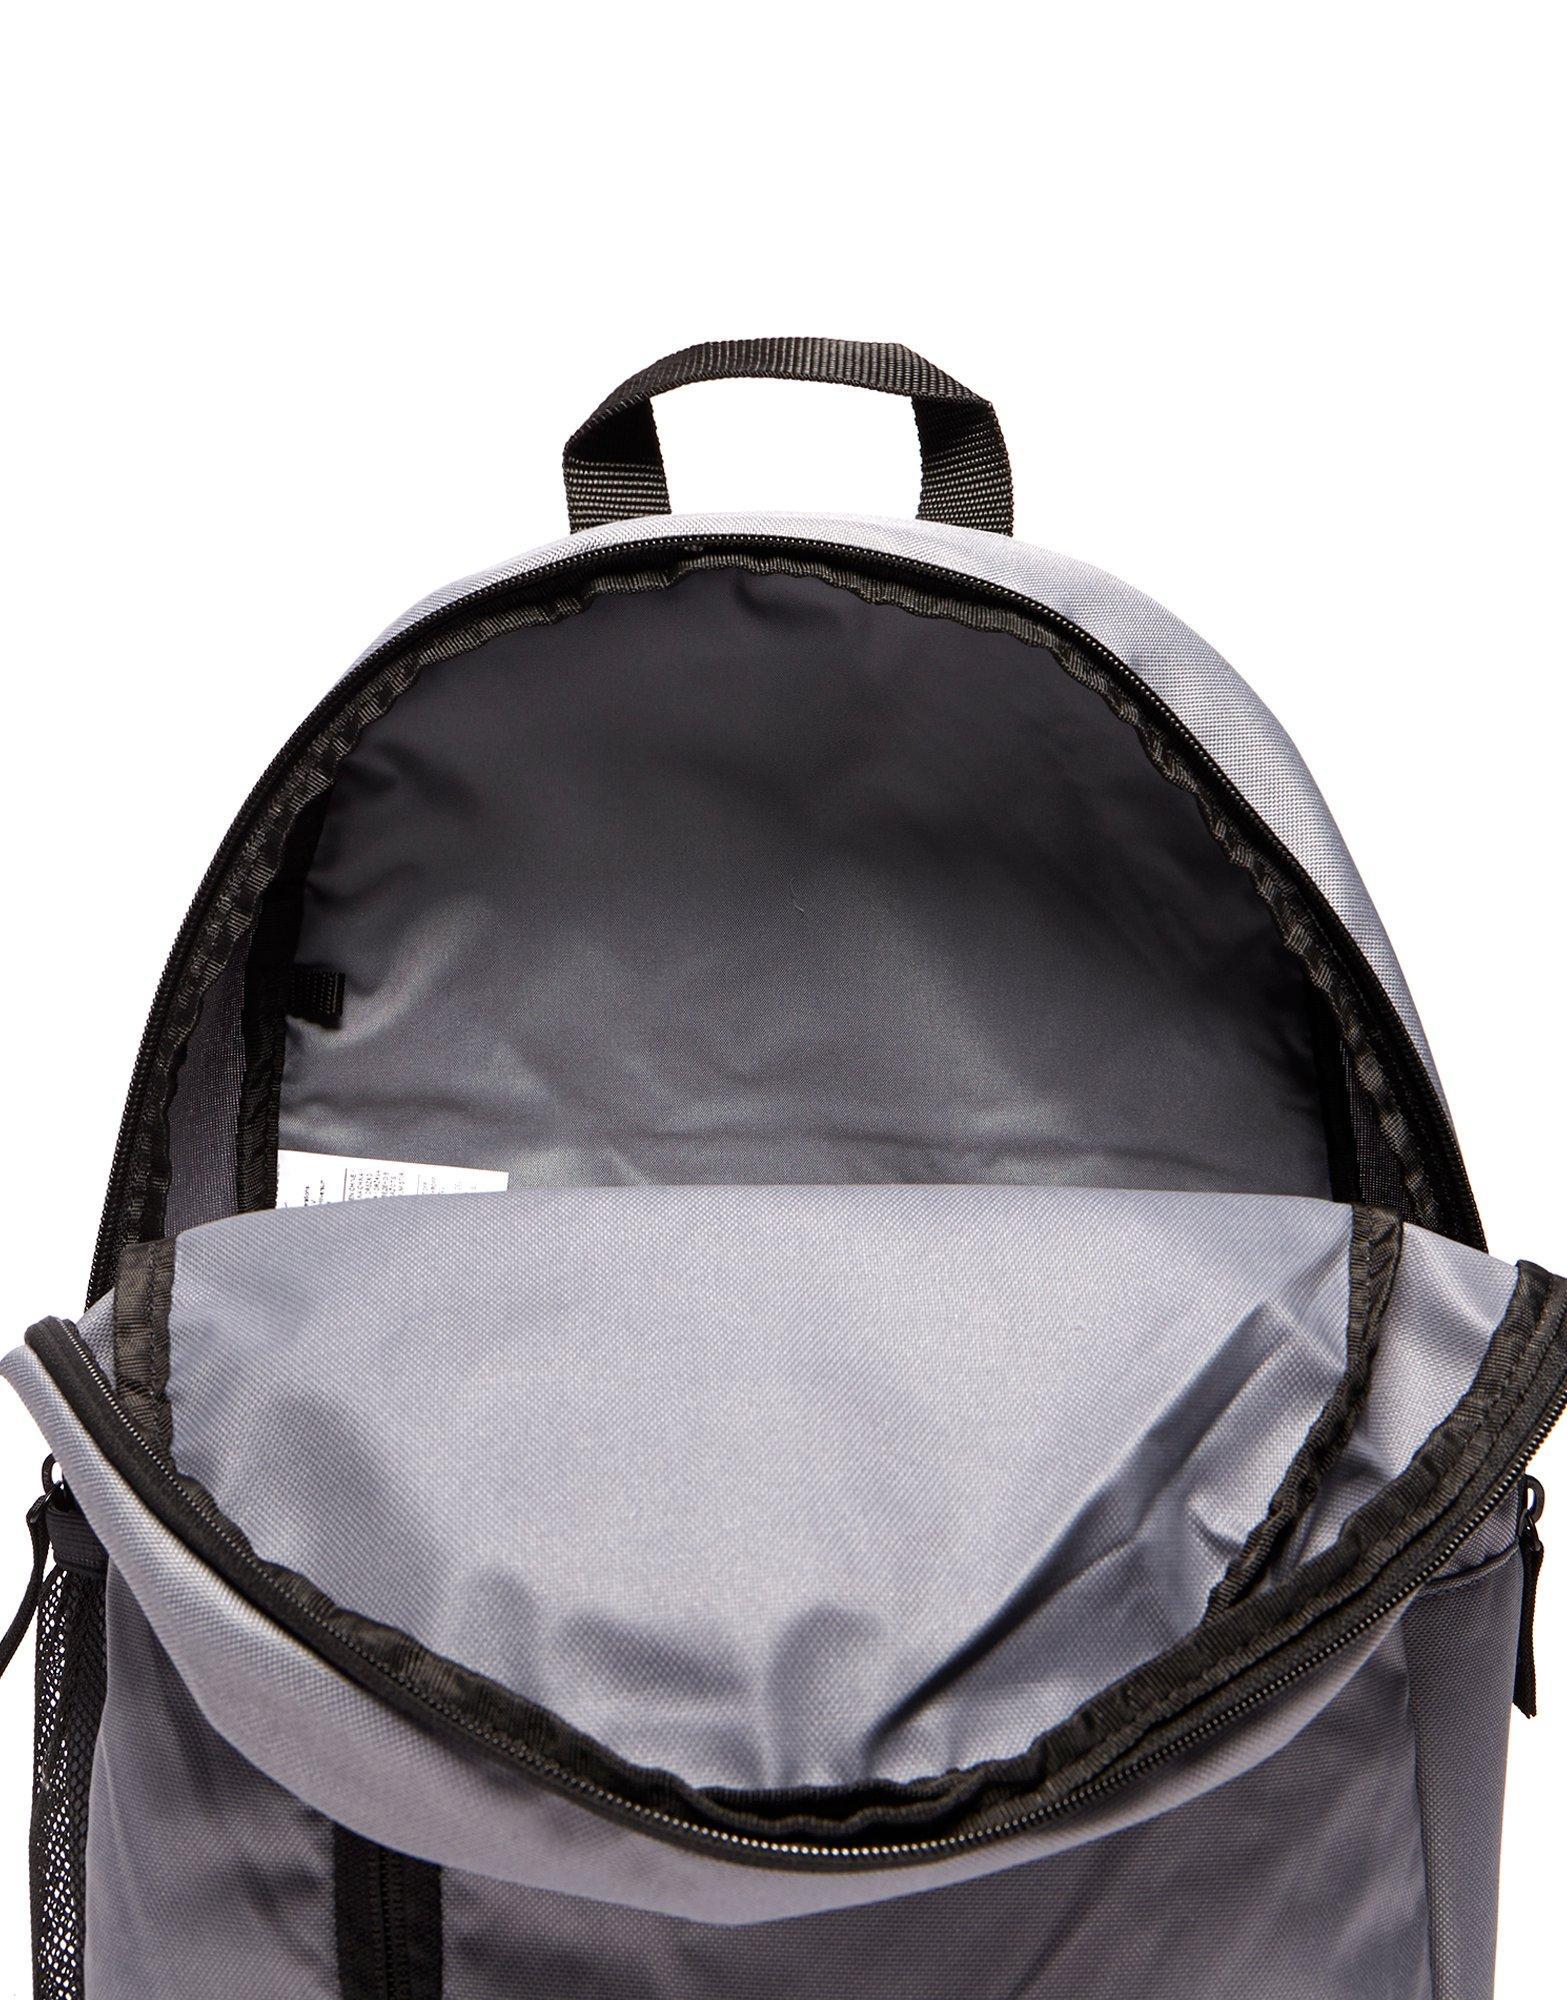 Nike Elemental Backpack in Gray for Men - Lyst